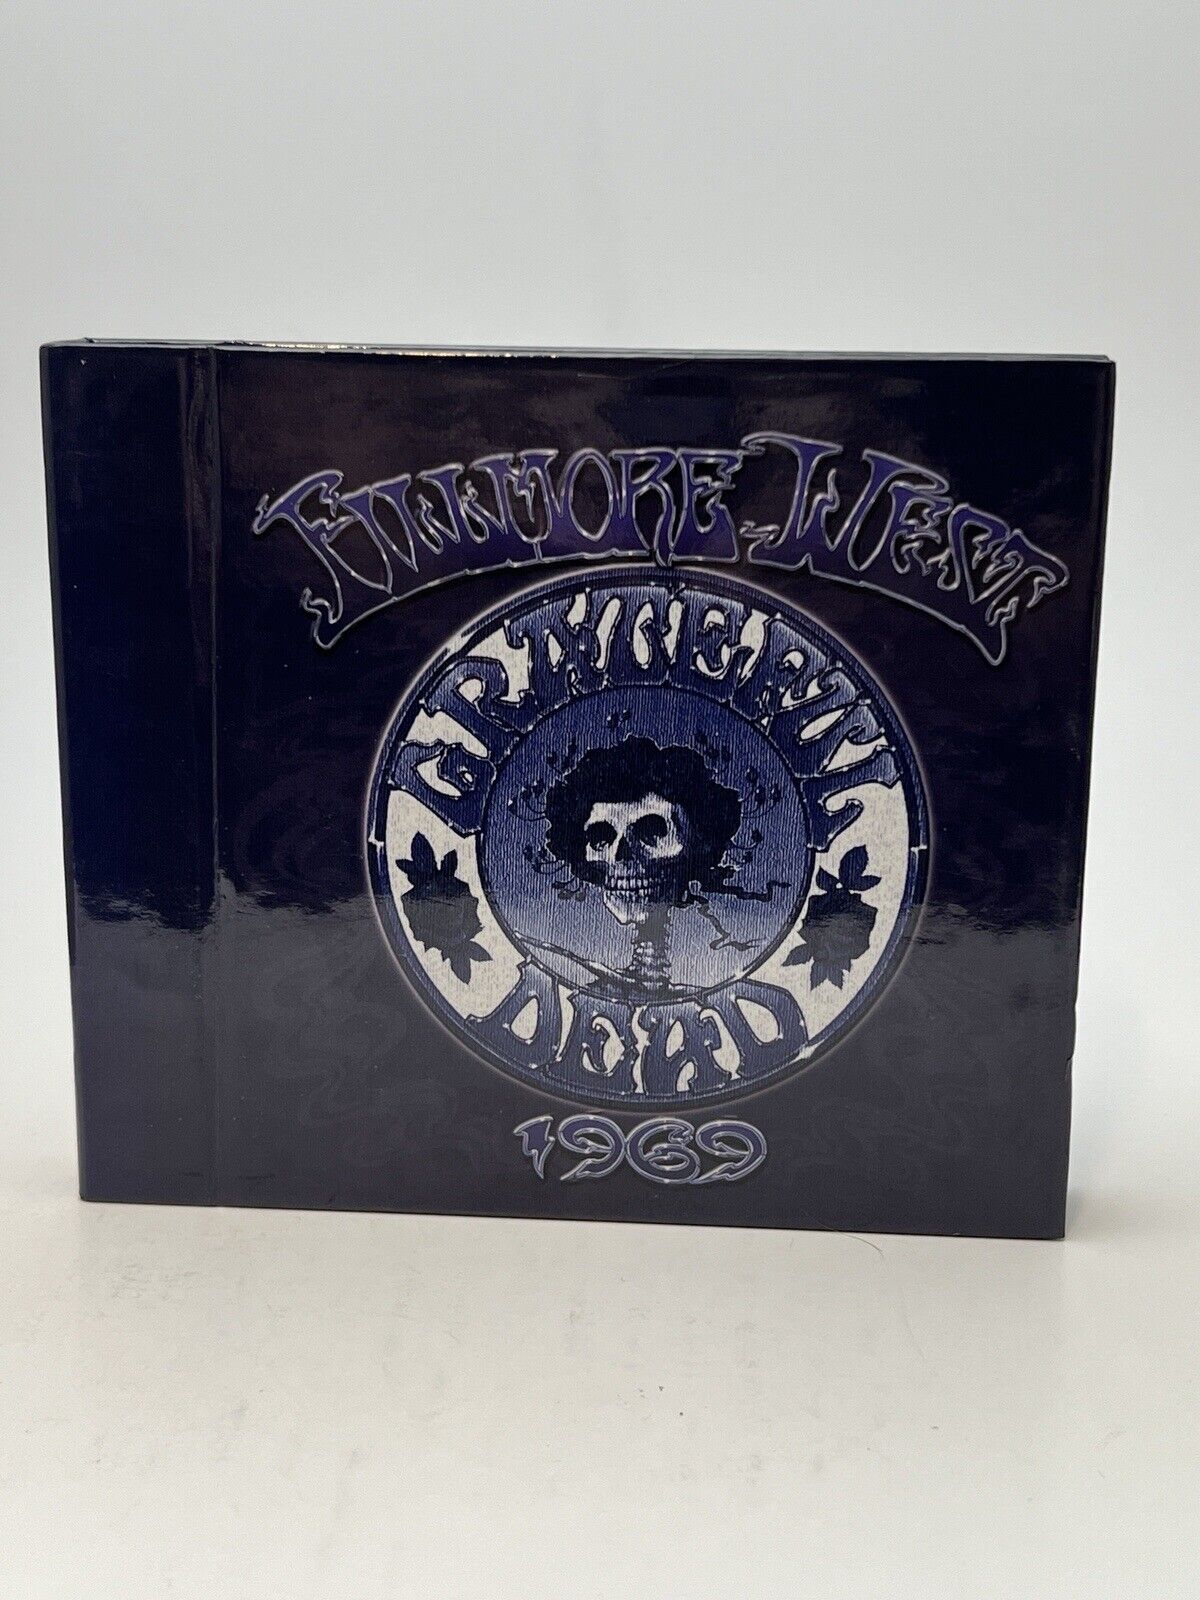 Grateful Dead : Fillmore West 1969 [deluxe 3-cd Set] CD 3 discs (2005) 